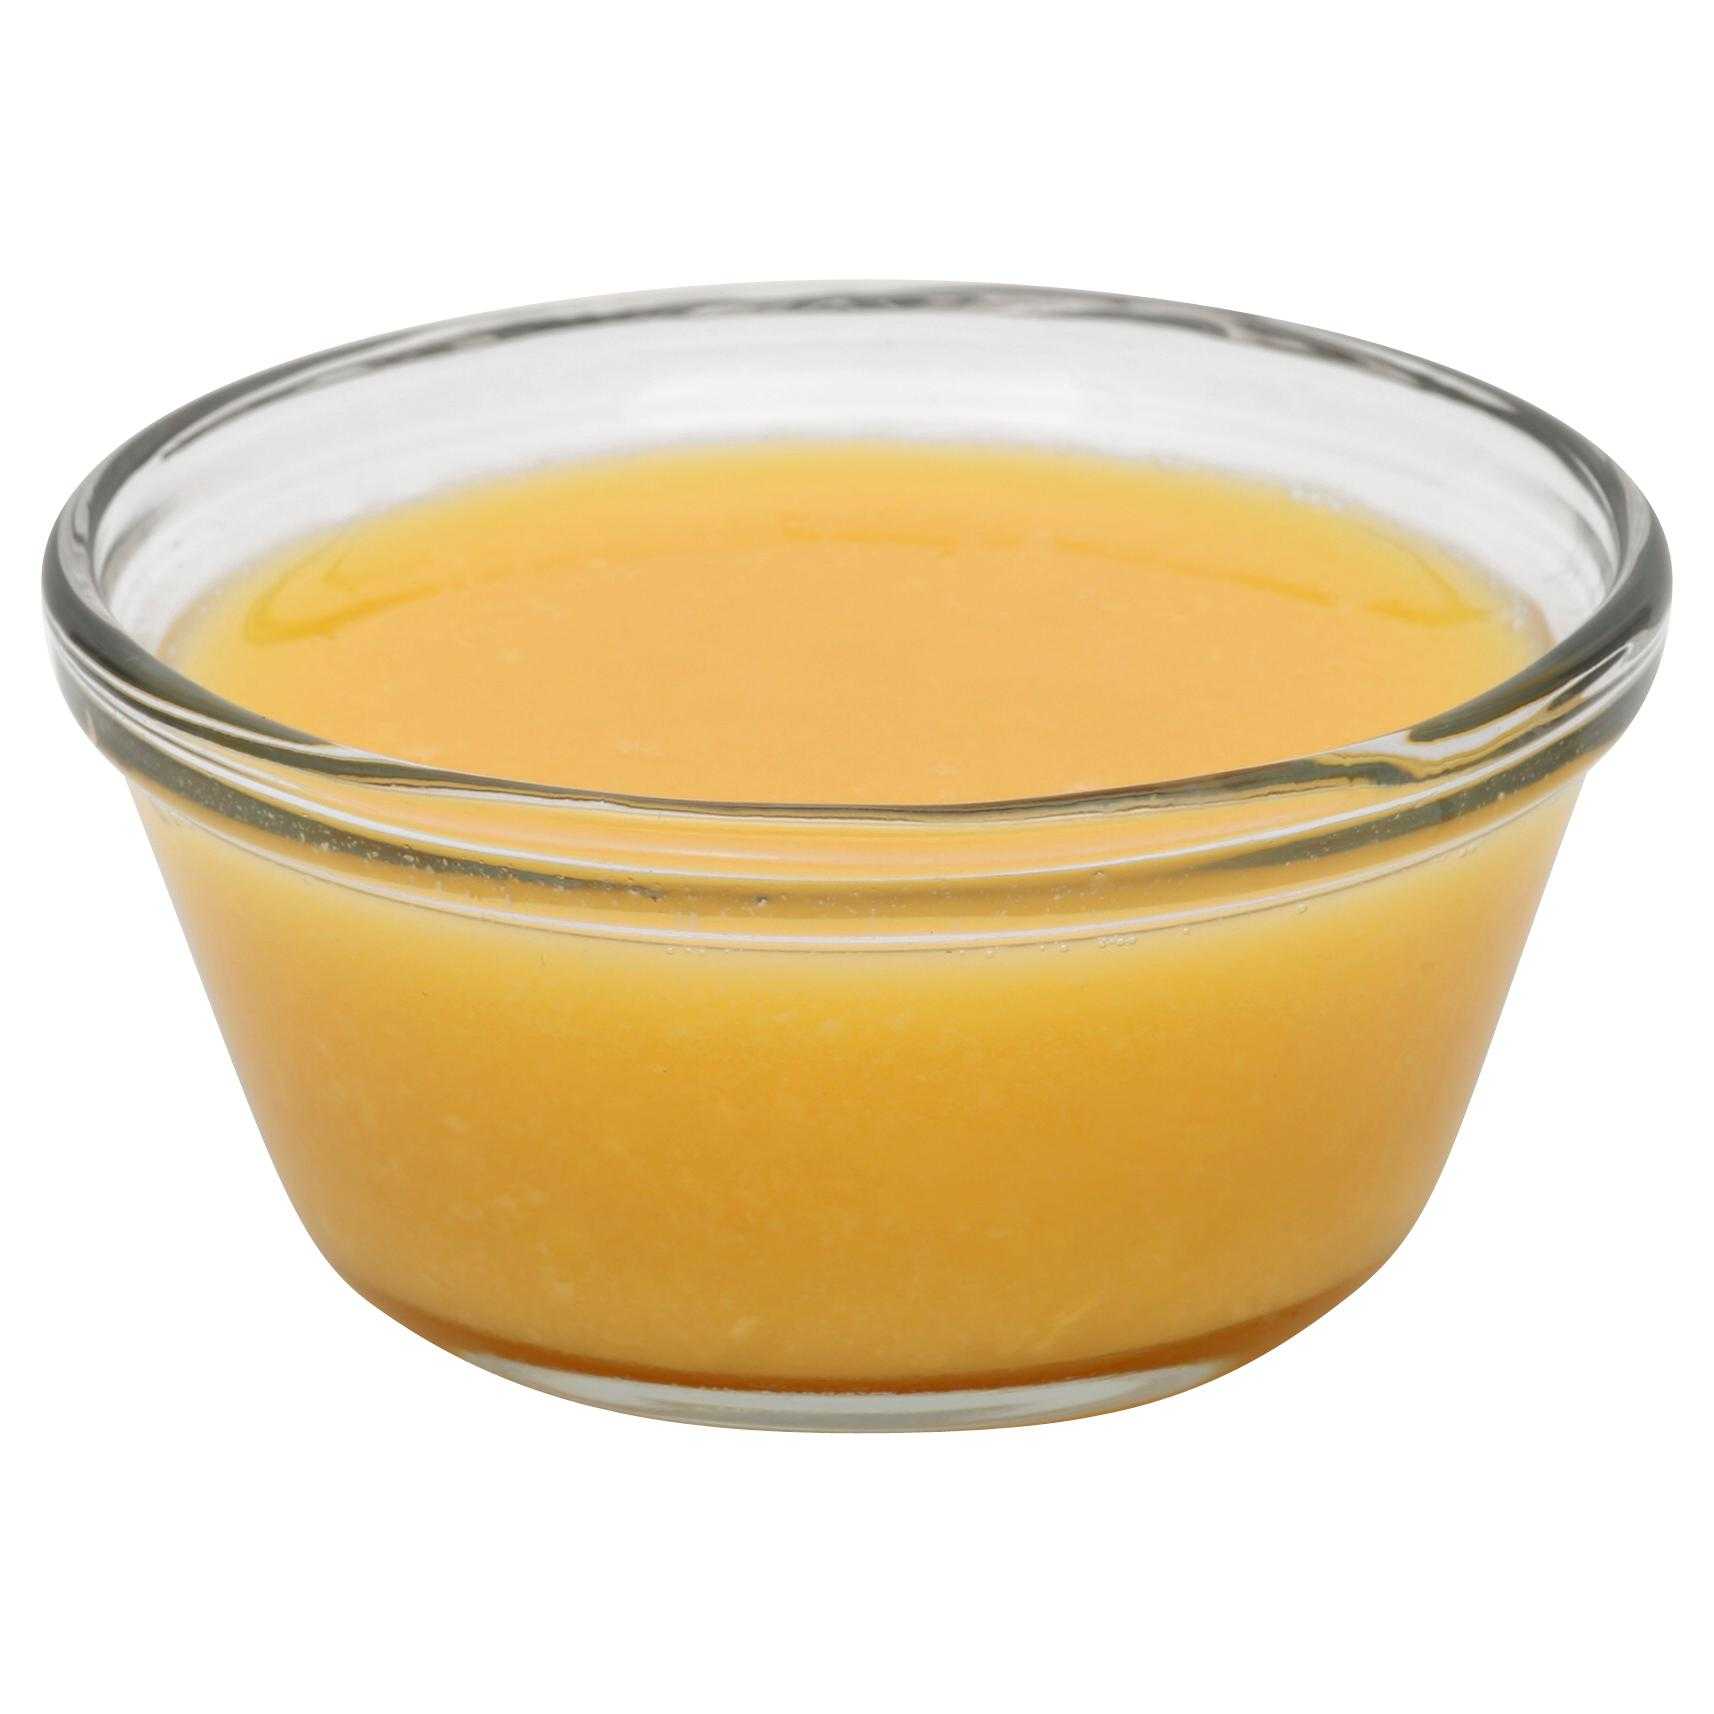 Papetti’s® Frozen Plain Whole Eggs with 24.2% Solids, 6/5 Lb Cartons